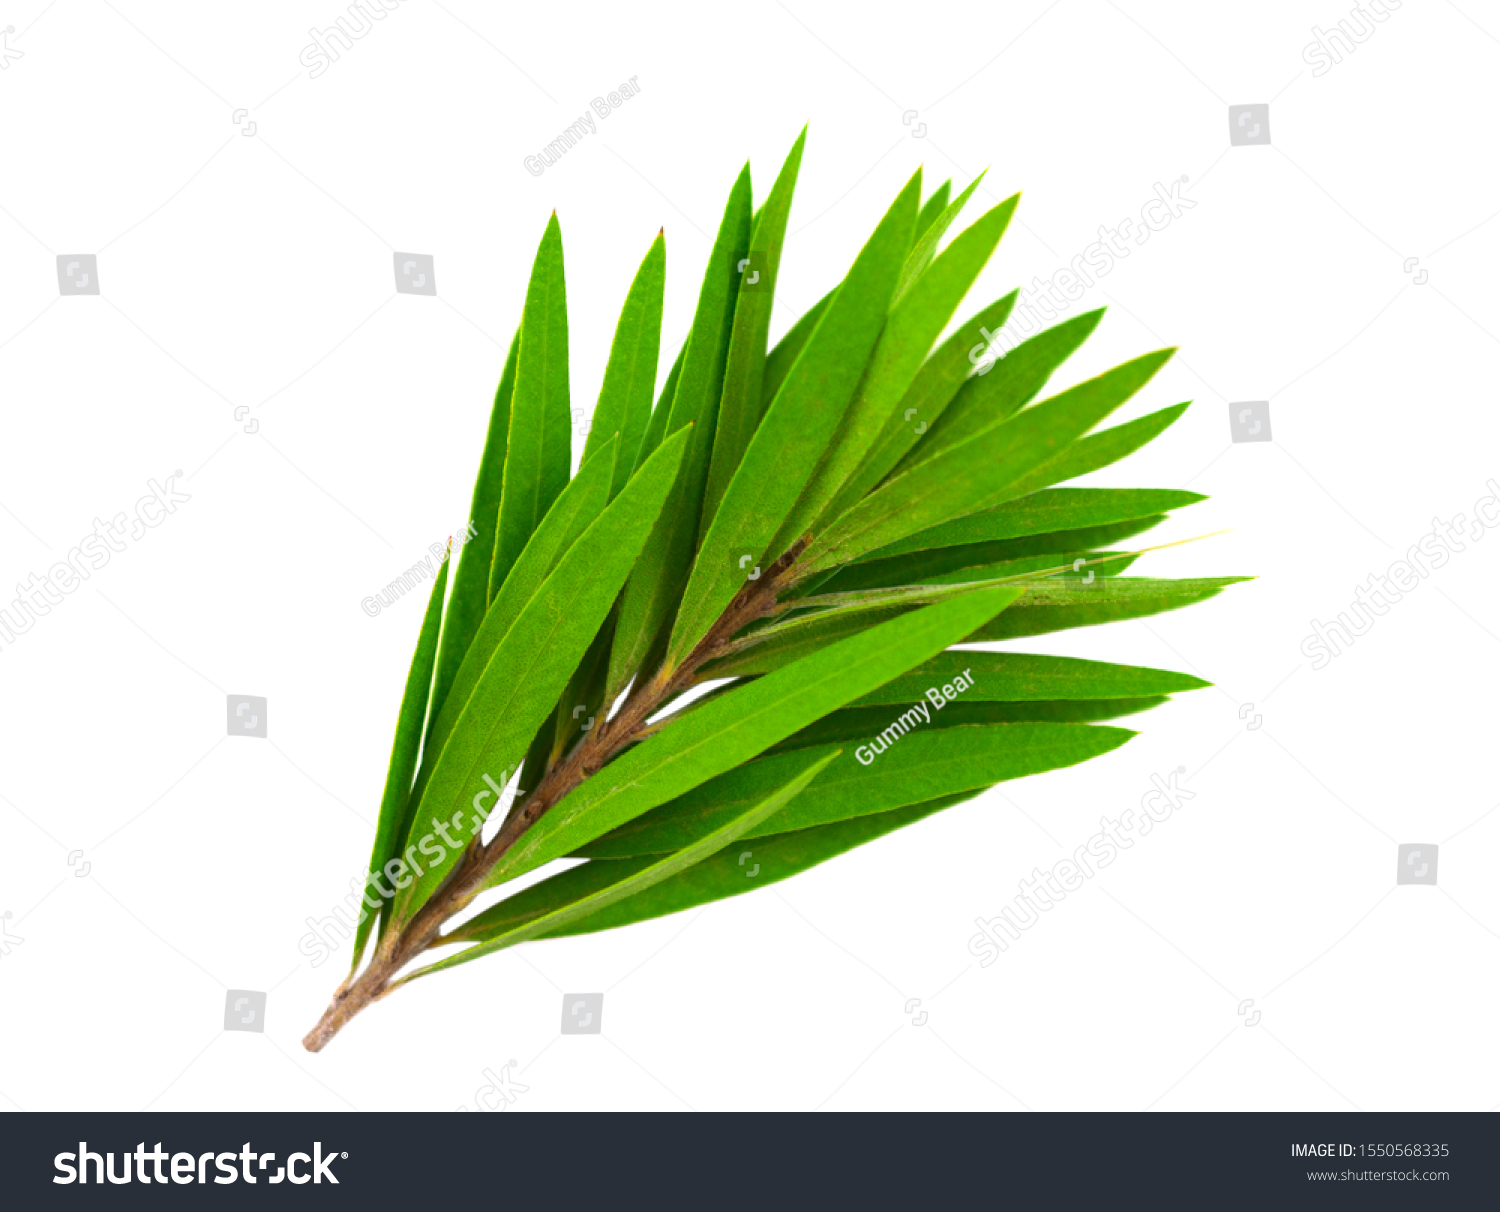 Melaleuca leaves Images, Stock Photos & Vectors | Shutterstock